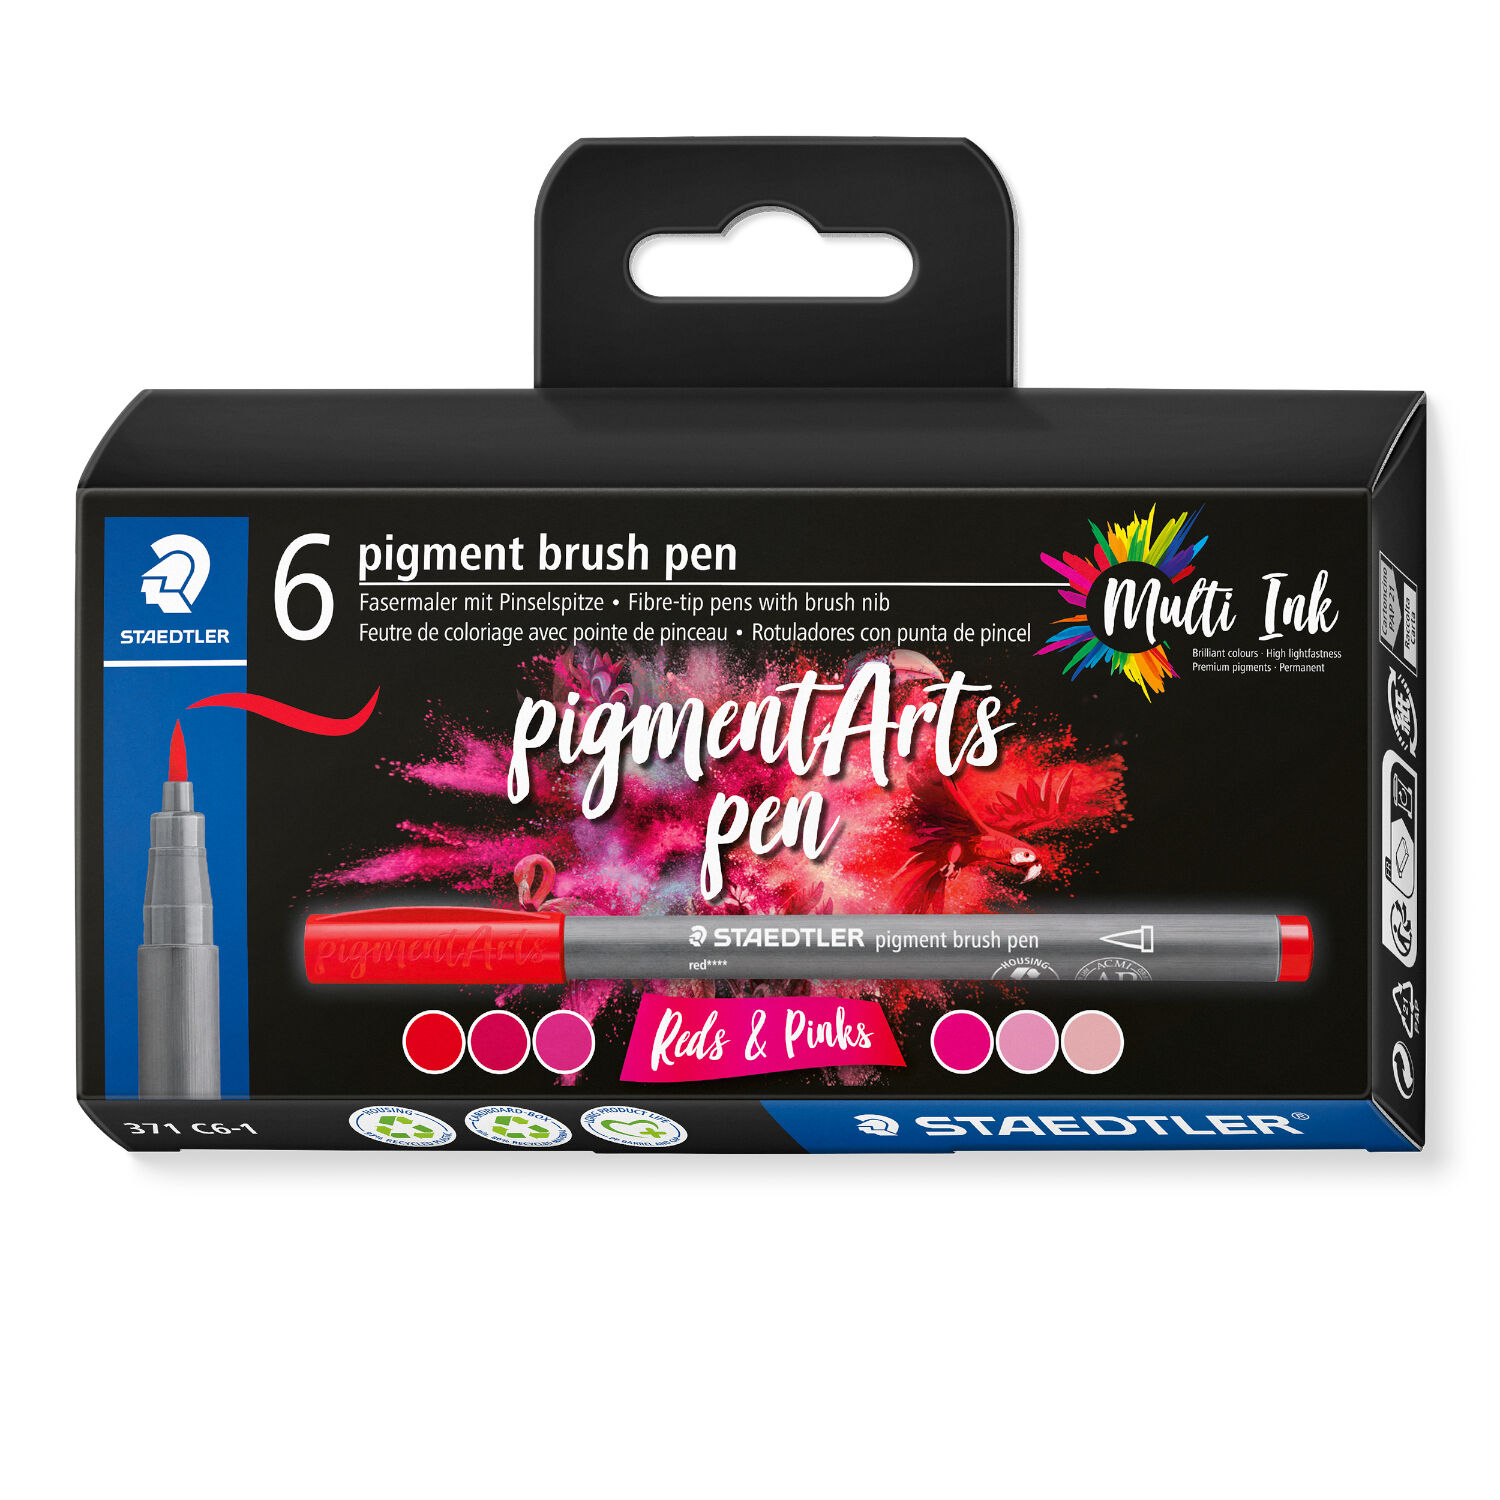 NEU Staedtler Pigment Brush Pen Set, Reds & Pinks, 6 Stifte